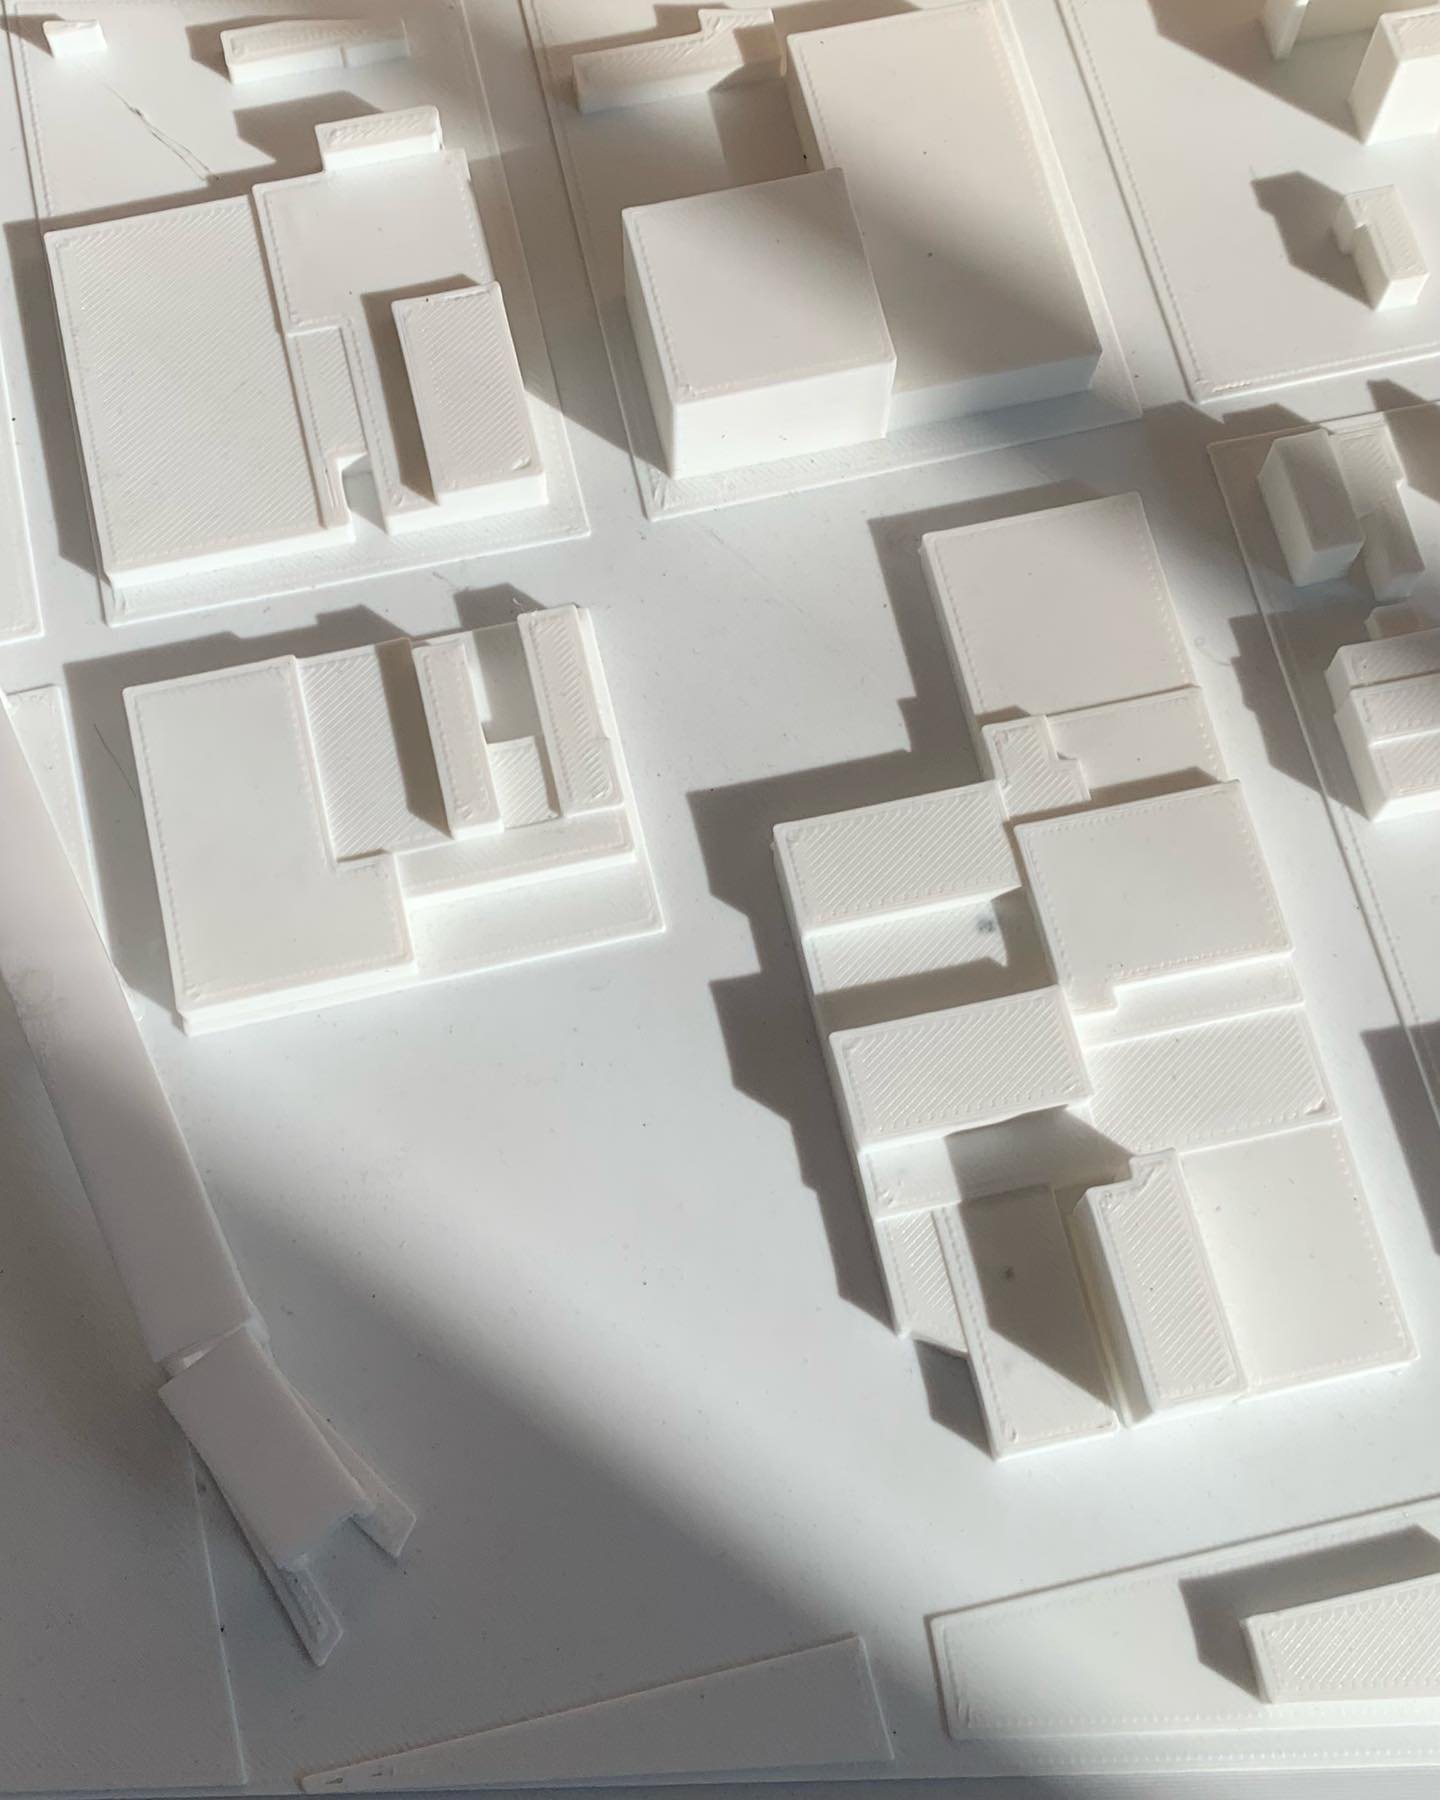 3D Printed Site Model of East New York, Brooklyn. 
December 2023.